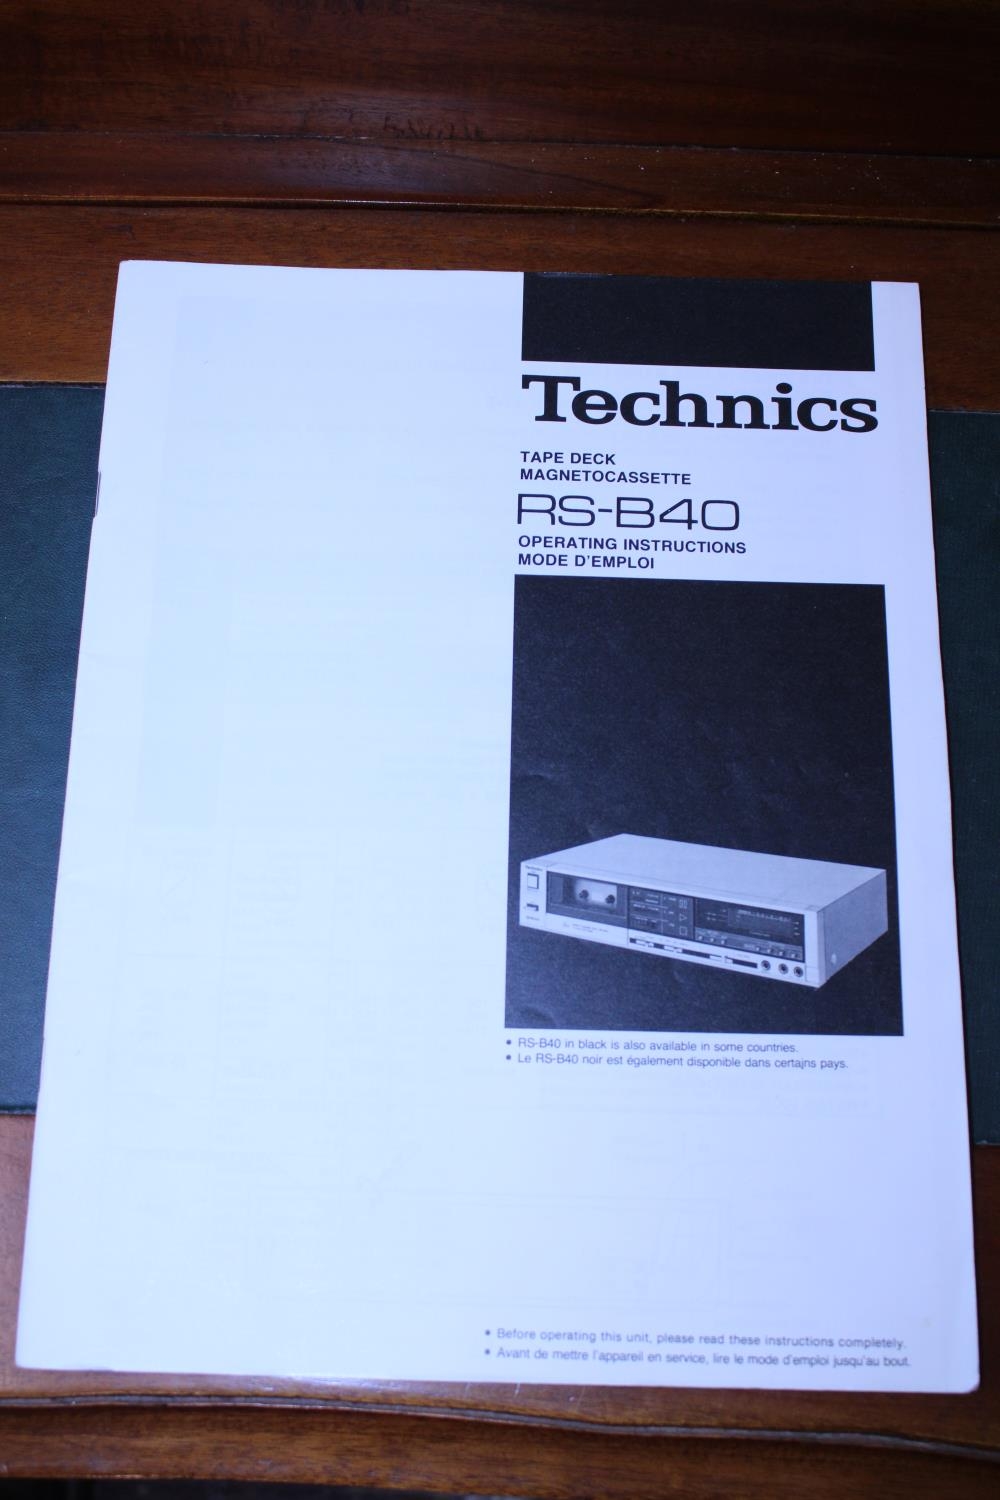 A boxed technics RS-B40 tape deck